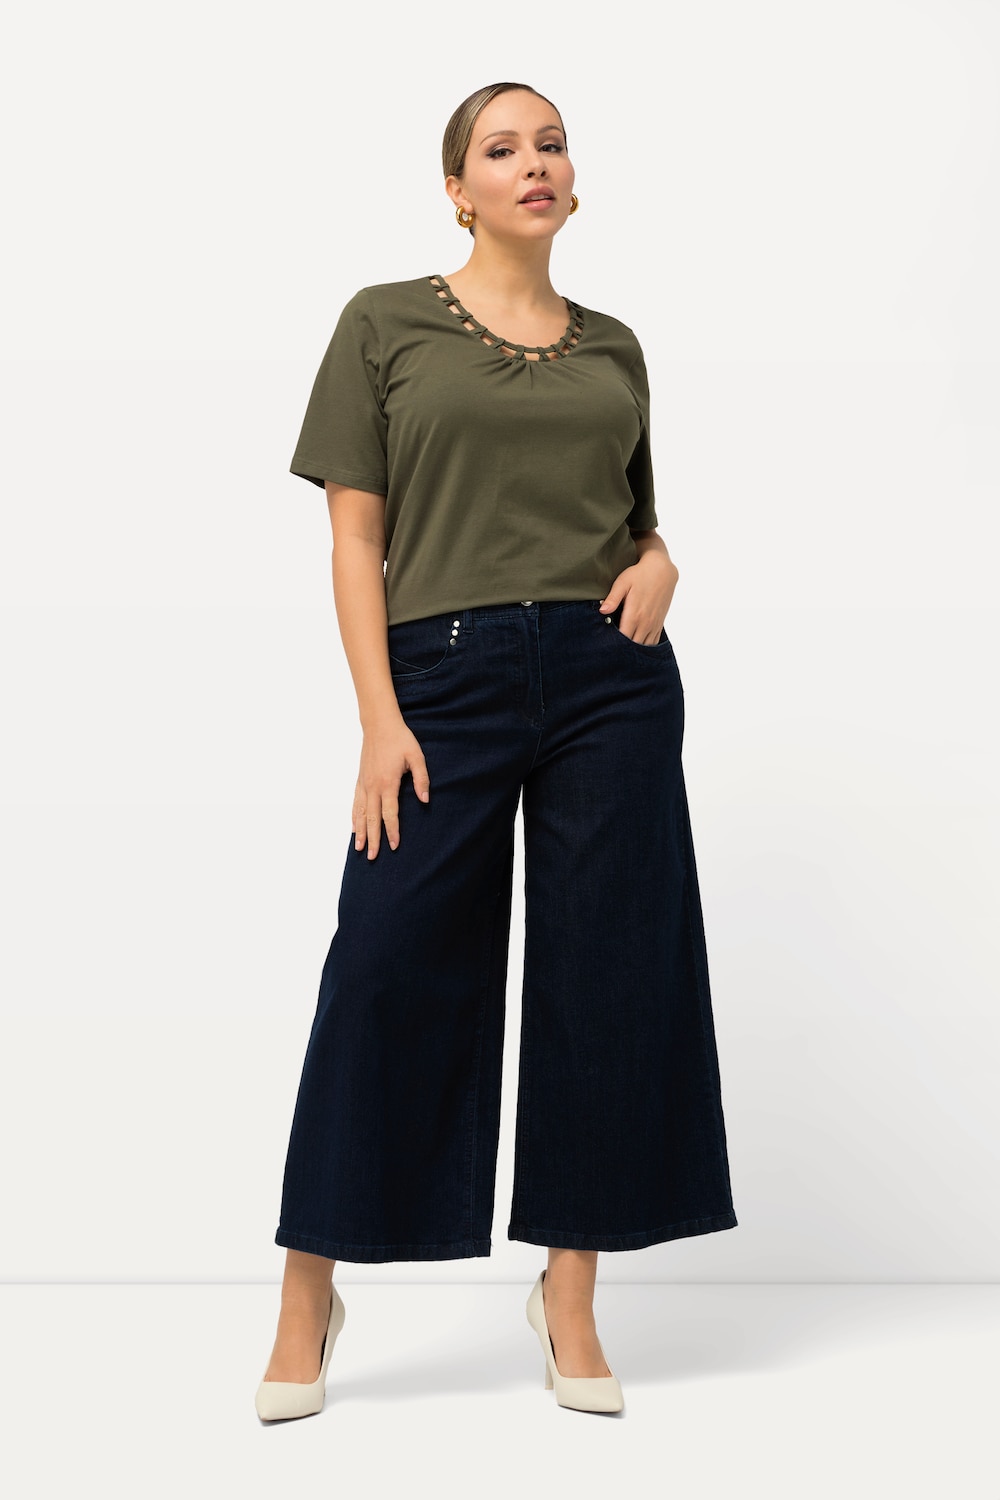 Jeans-Culotte, wadenlang, weites Bein, Marlenehose